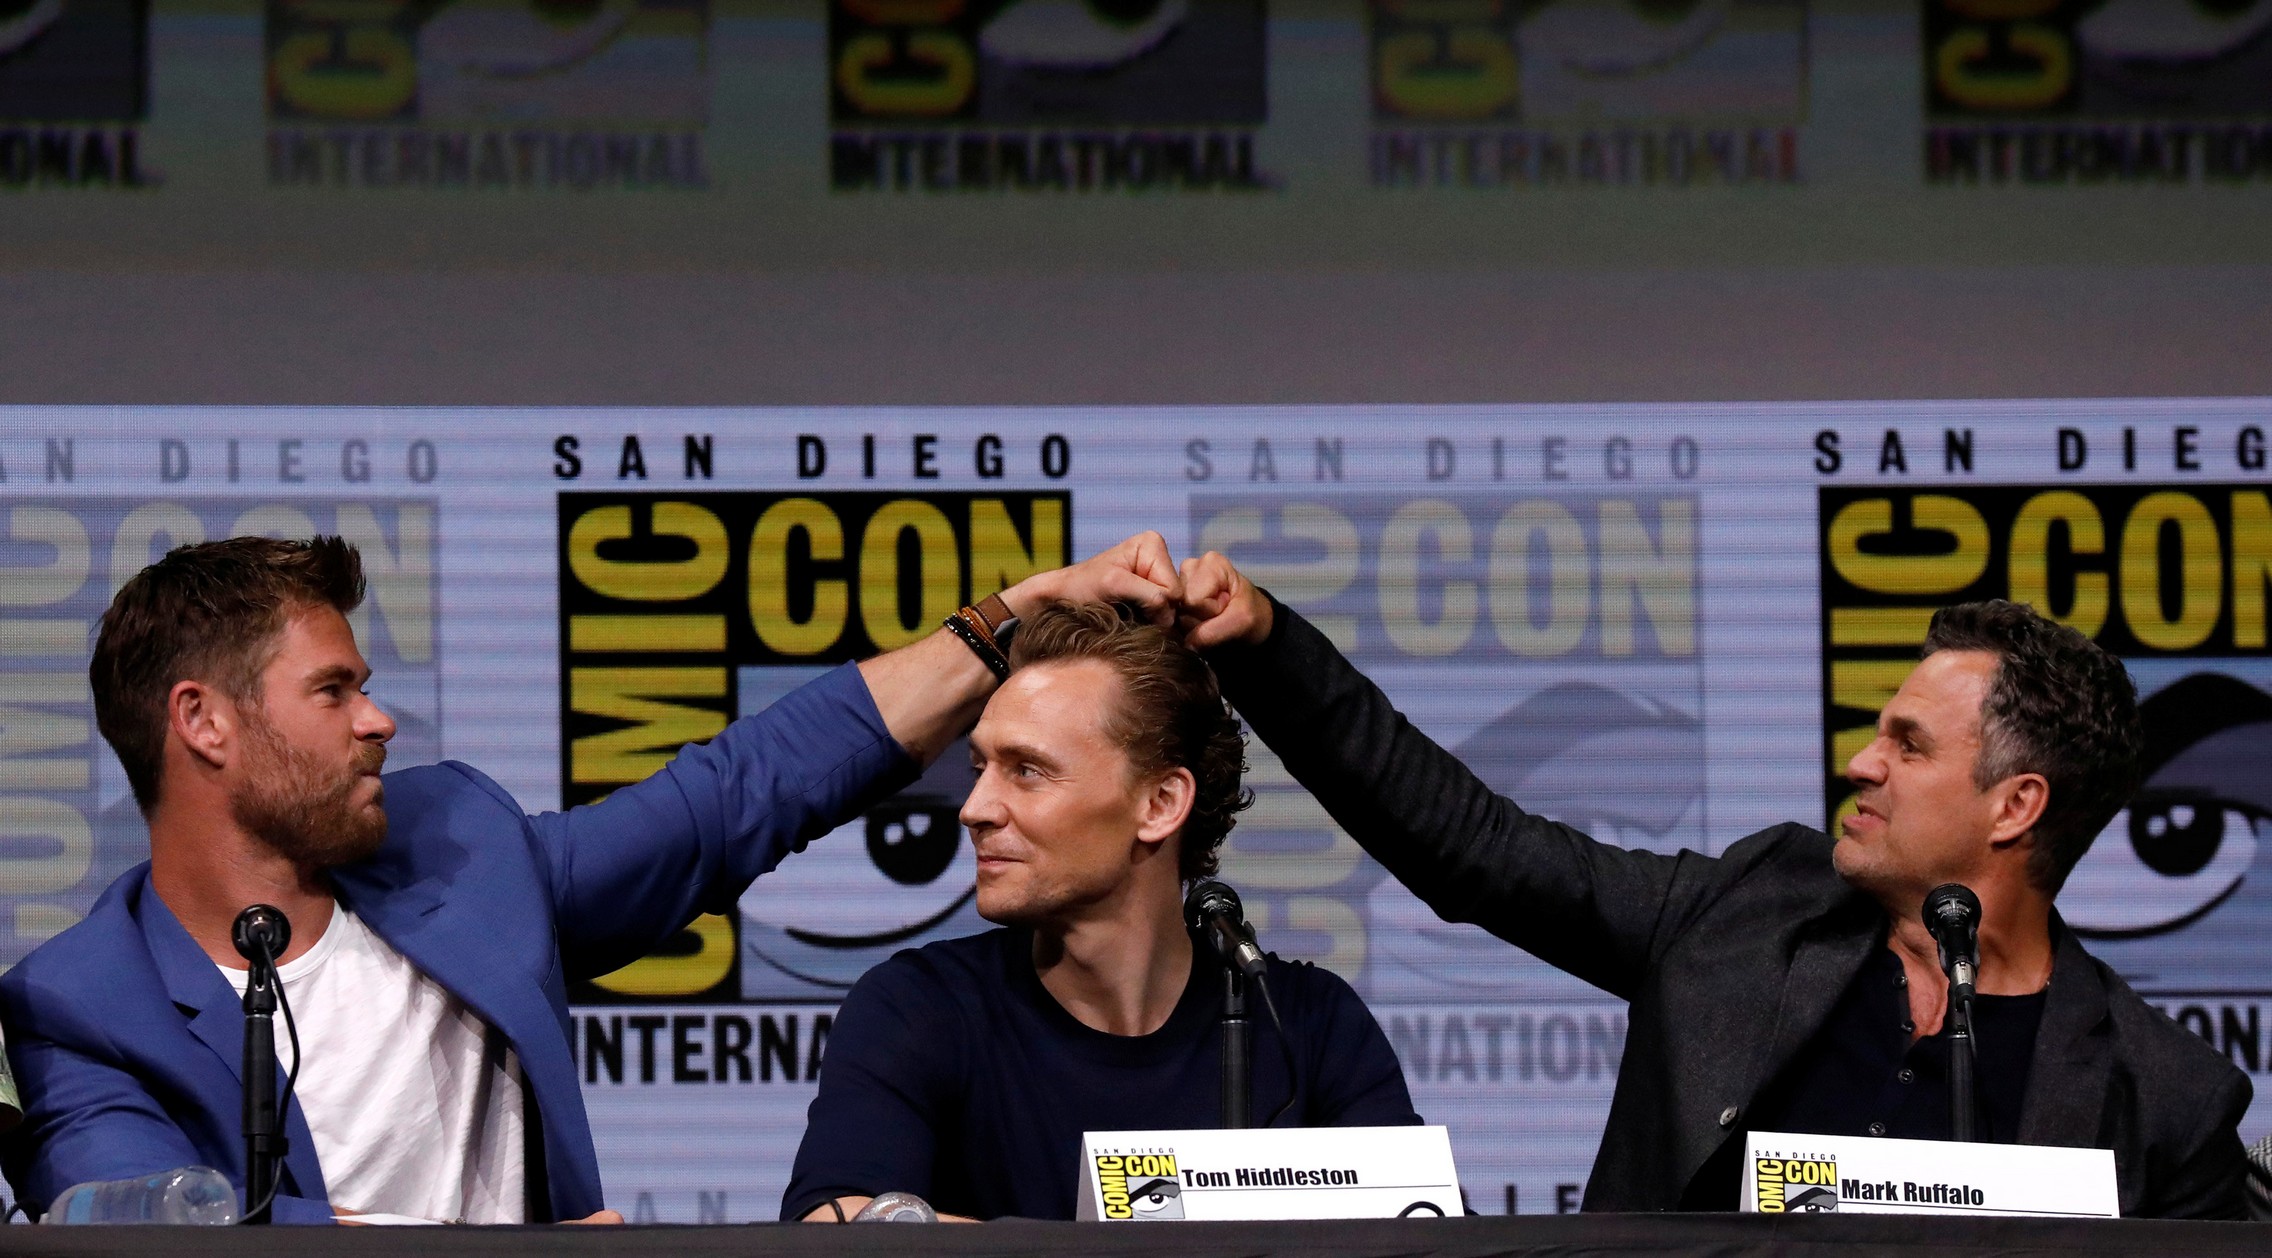 [Photos] Tom Attends Thor: Ragnarok Panel at Comic Con